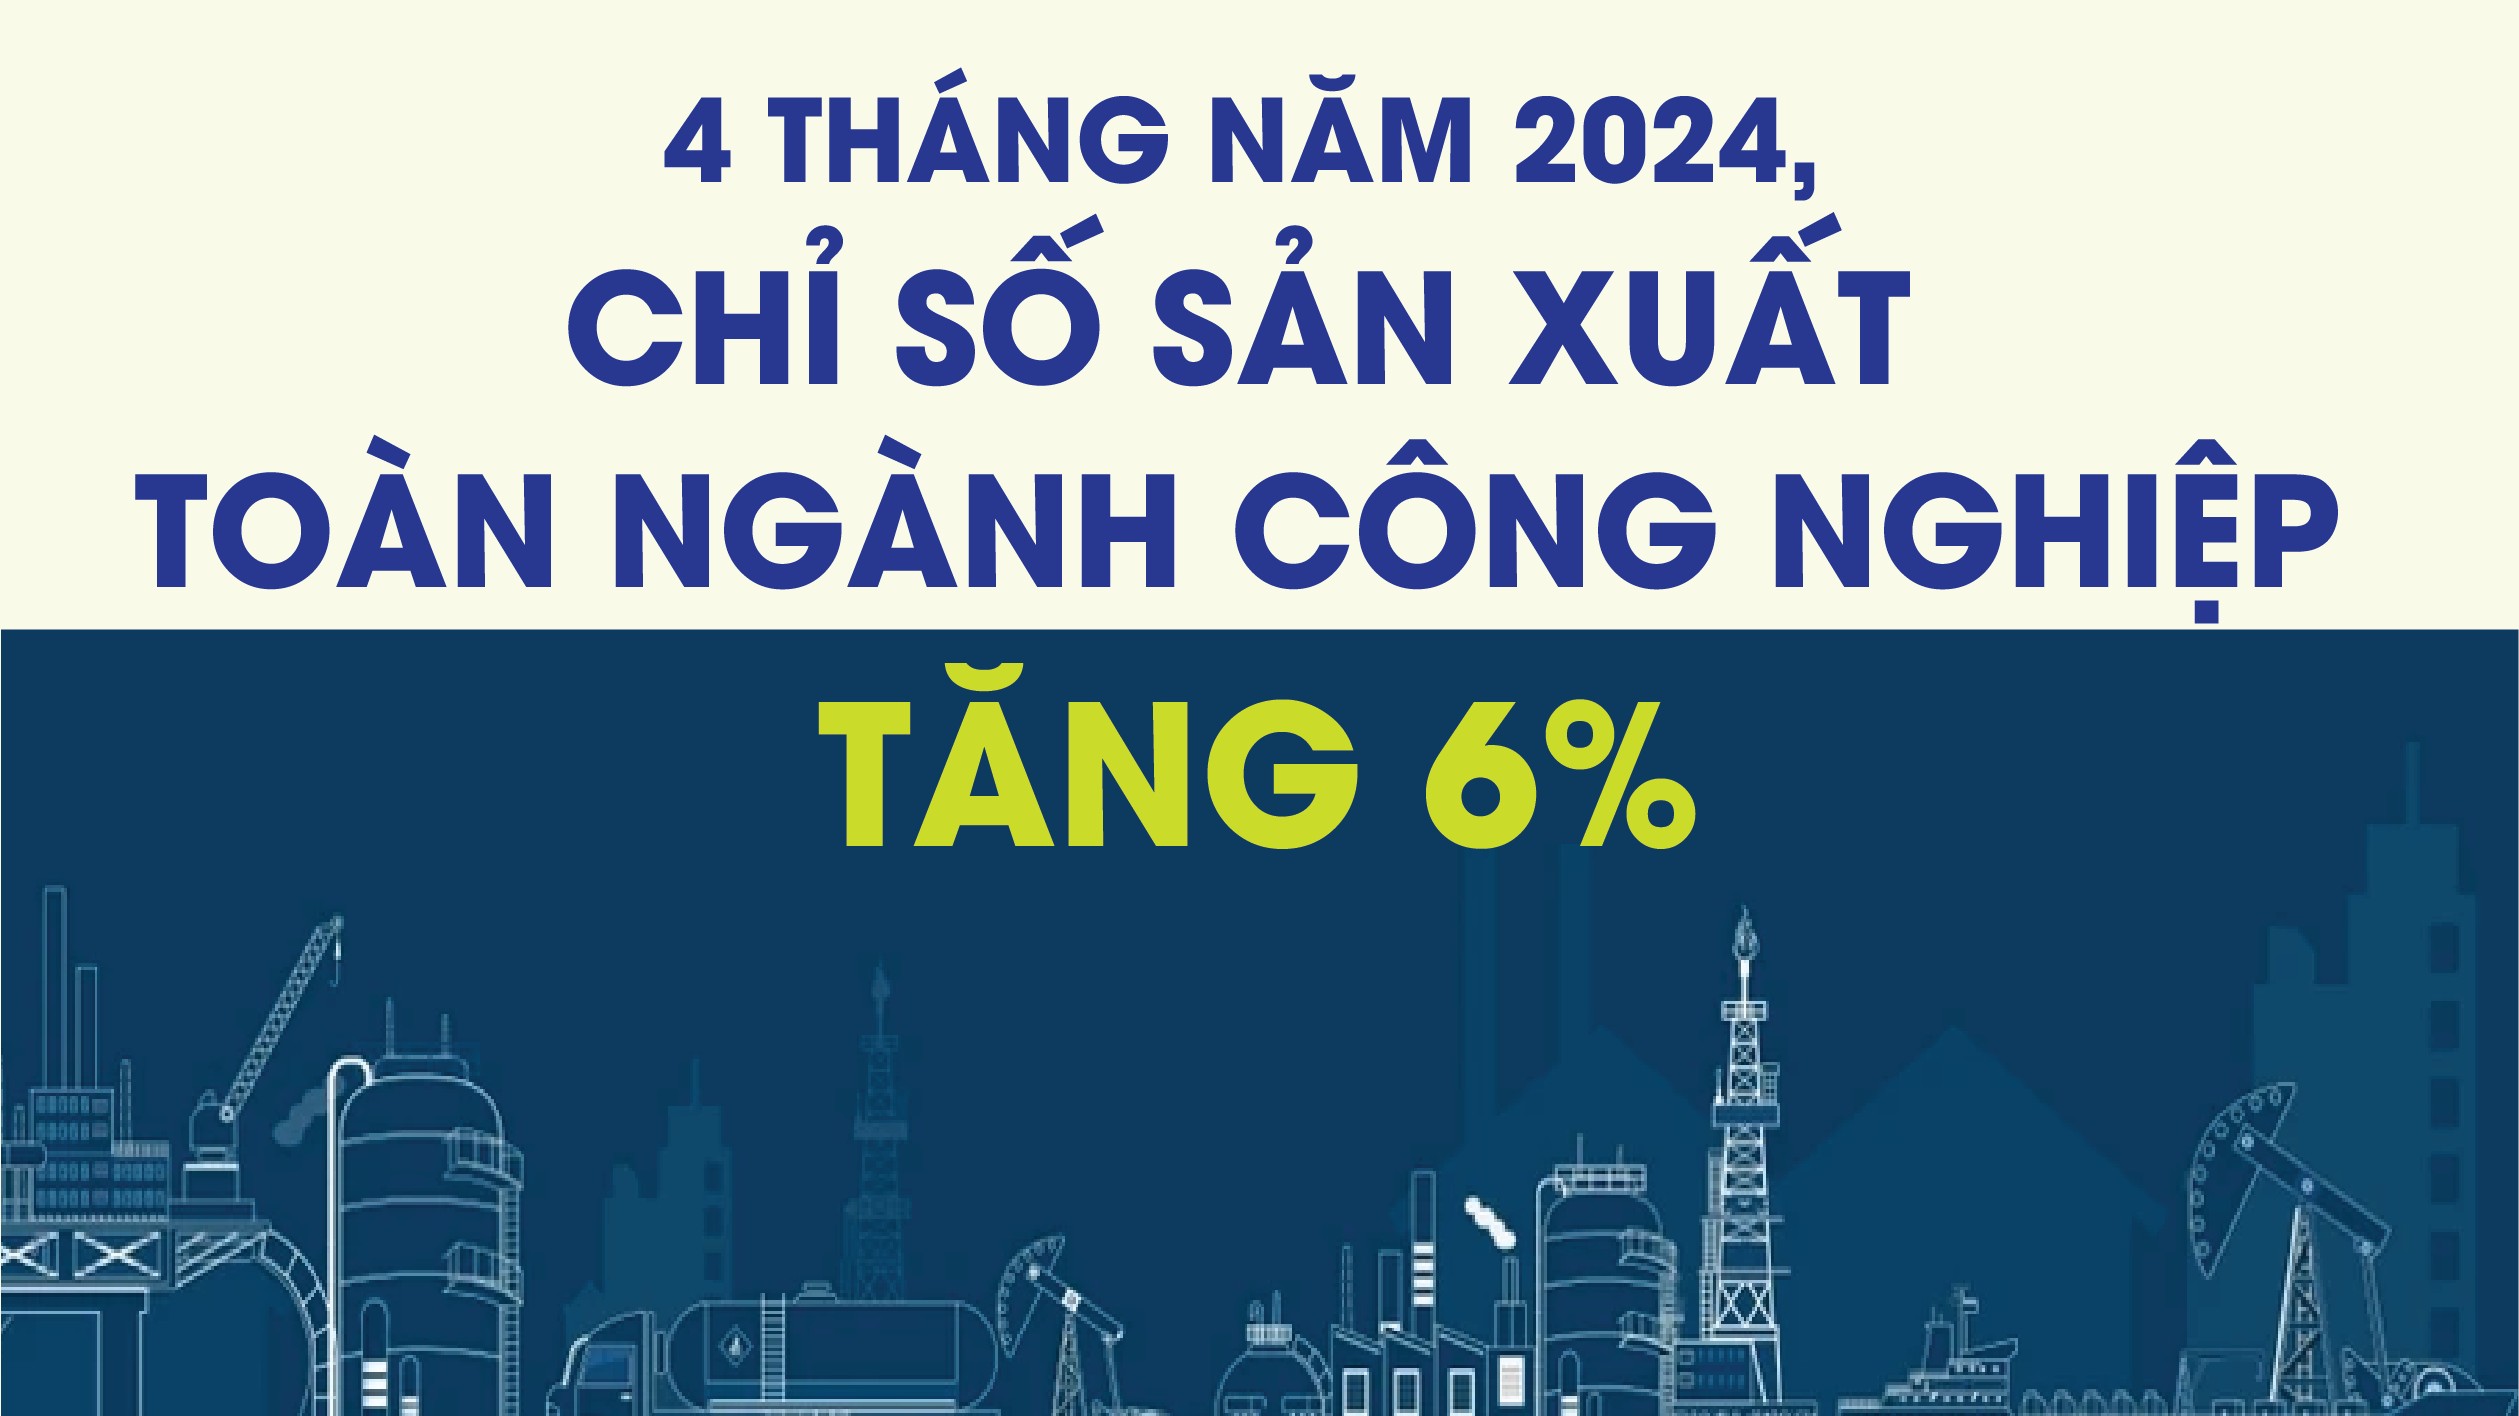 infographics chi so san xuat toan nganh cong nghiep tang 6 trong 4 thang nam 2024